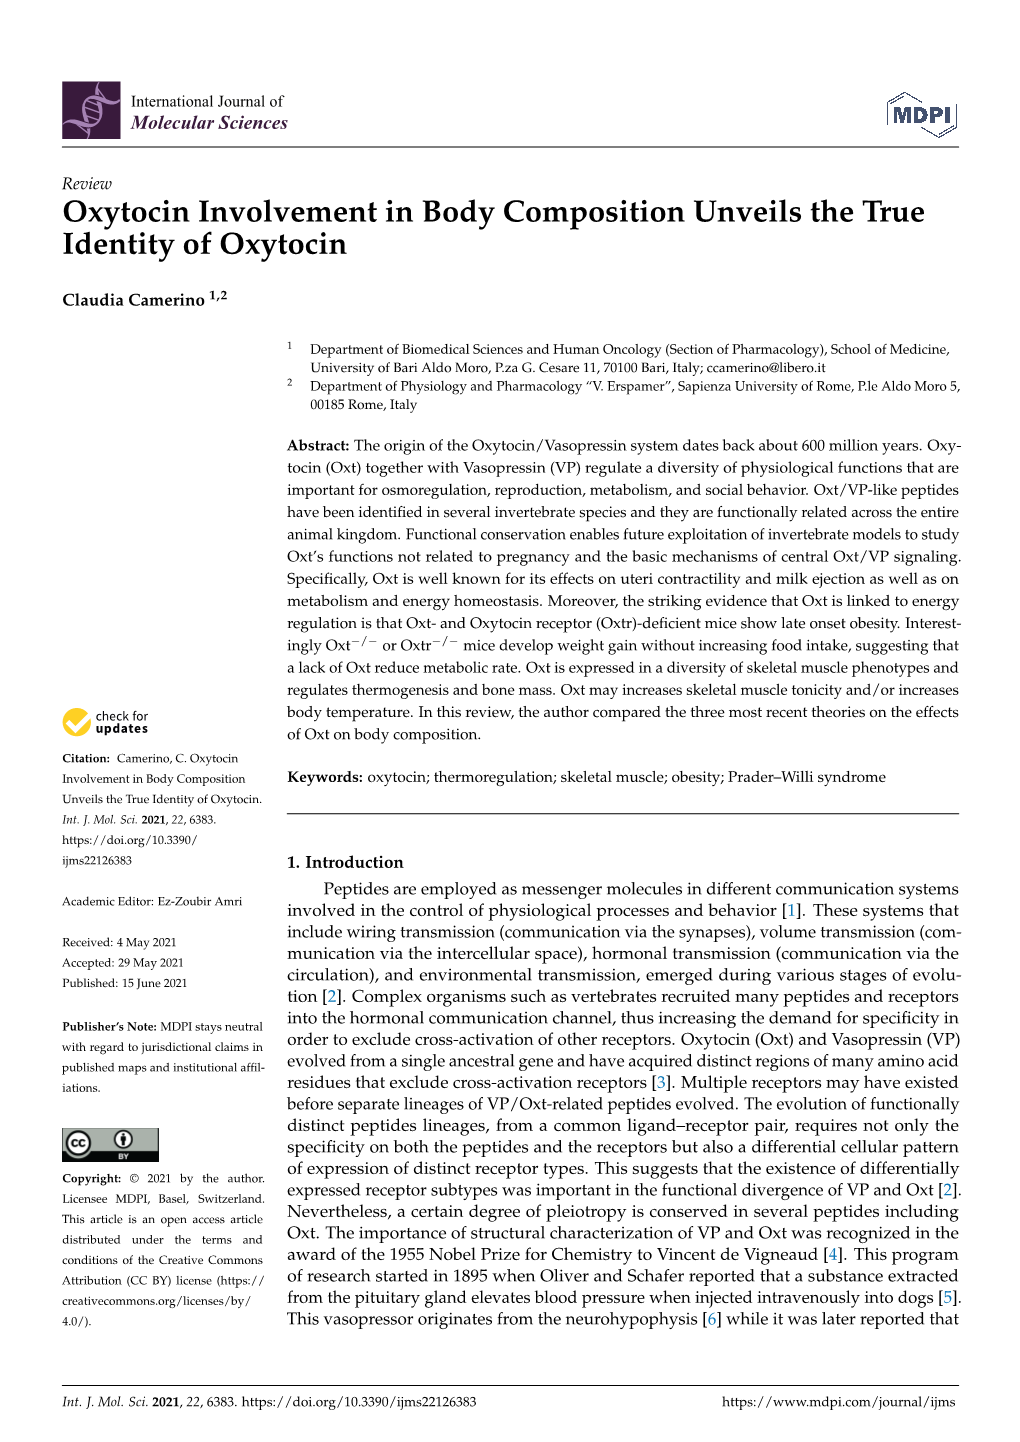 Oxytocin Involvement in Body Composition Unveils the True Identity of Oxytocin